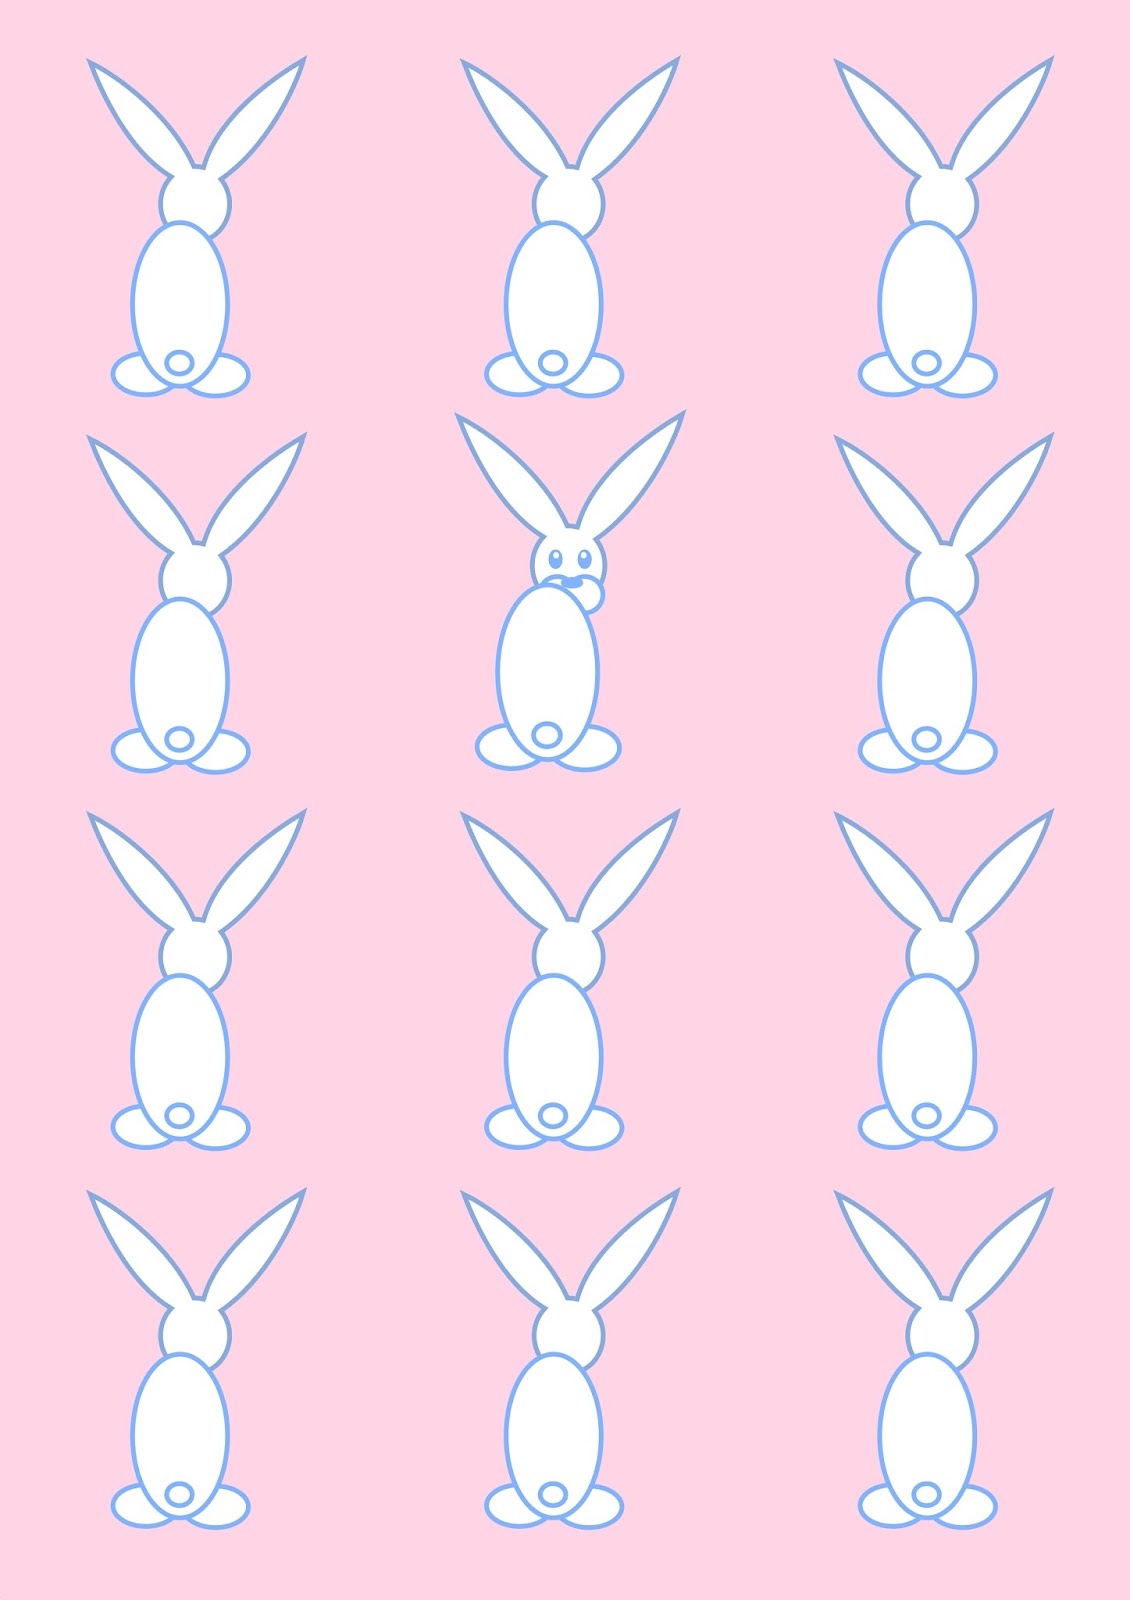 http://4.bp.blogspot.com/-rNODrv3aQ4Q/VOHx1yDitoI/AAAAAAAAiIE/g5VrWYYem_I/s1600/curious_bunny_paper.jpg